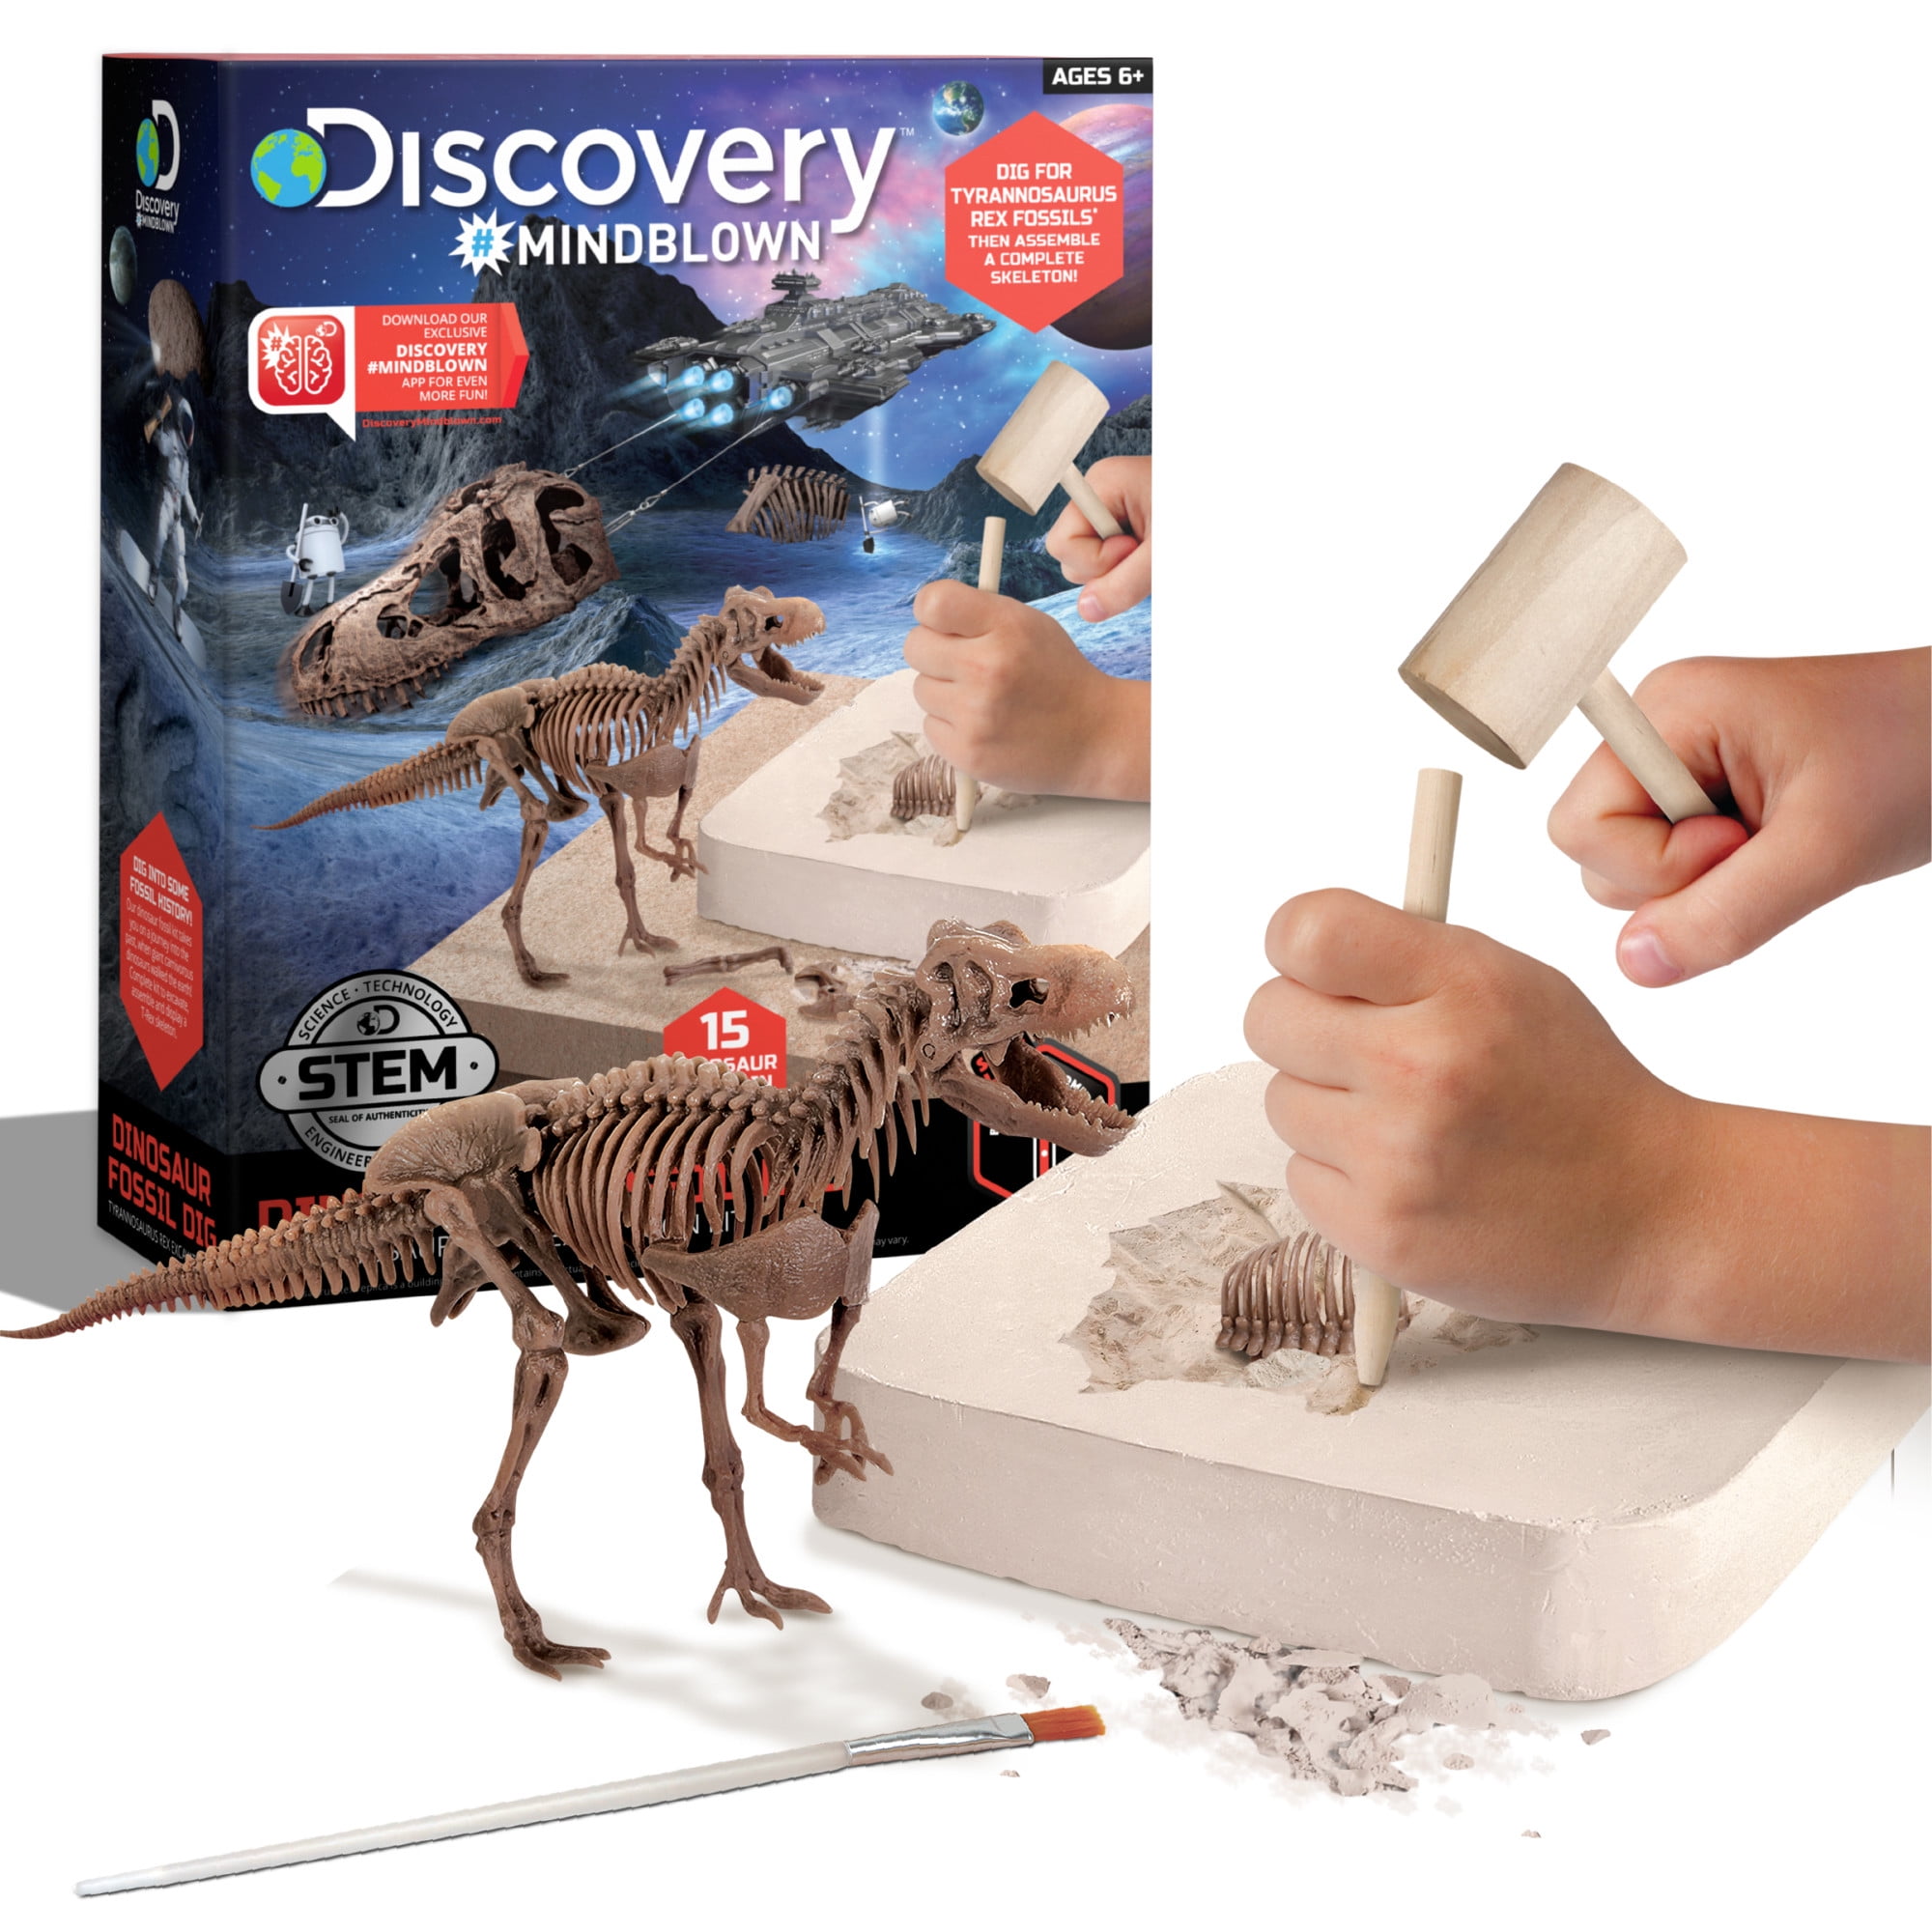 Dig a Dinosaur Tyrannosaurus Rex Kidz Labs Science 4M Kit for sale online 